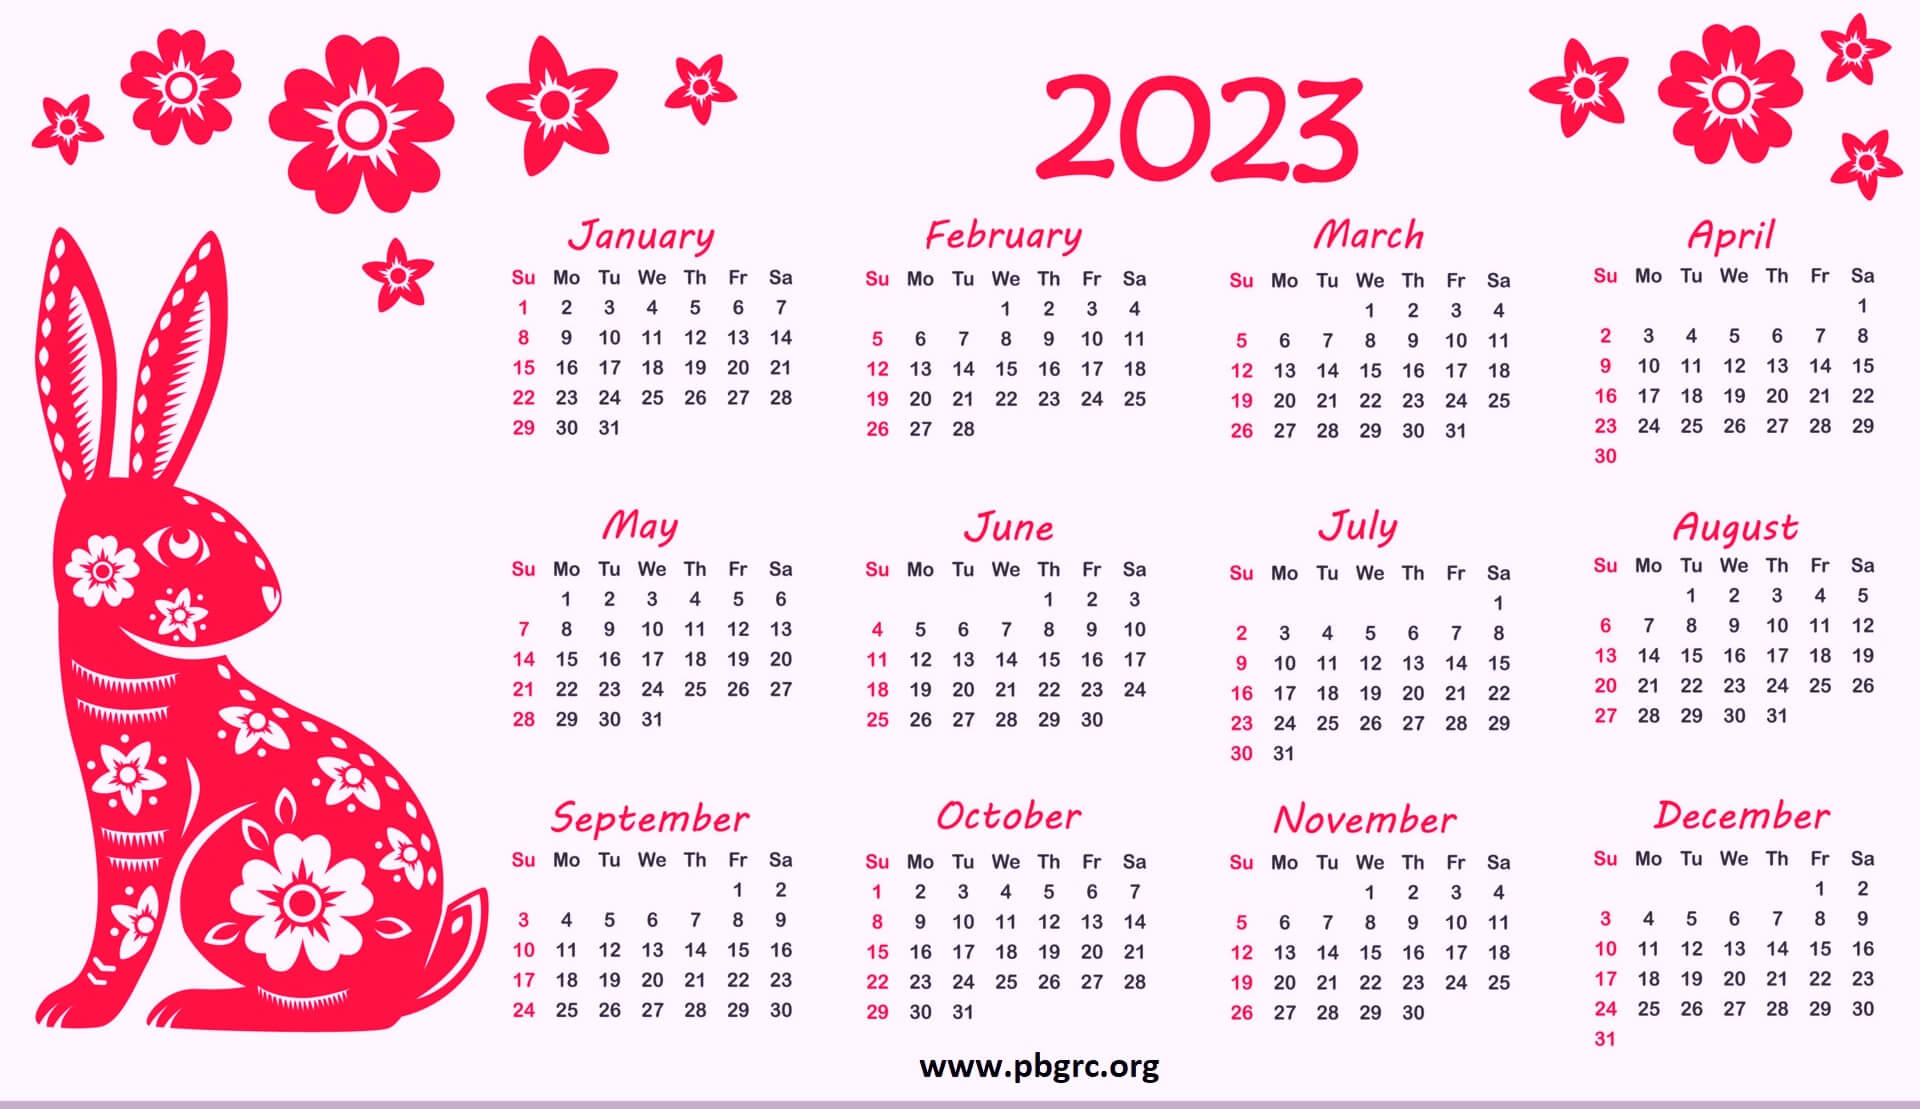 Calendar 2023 with zodiac sign